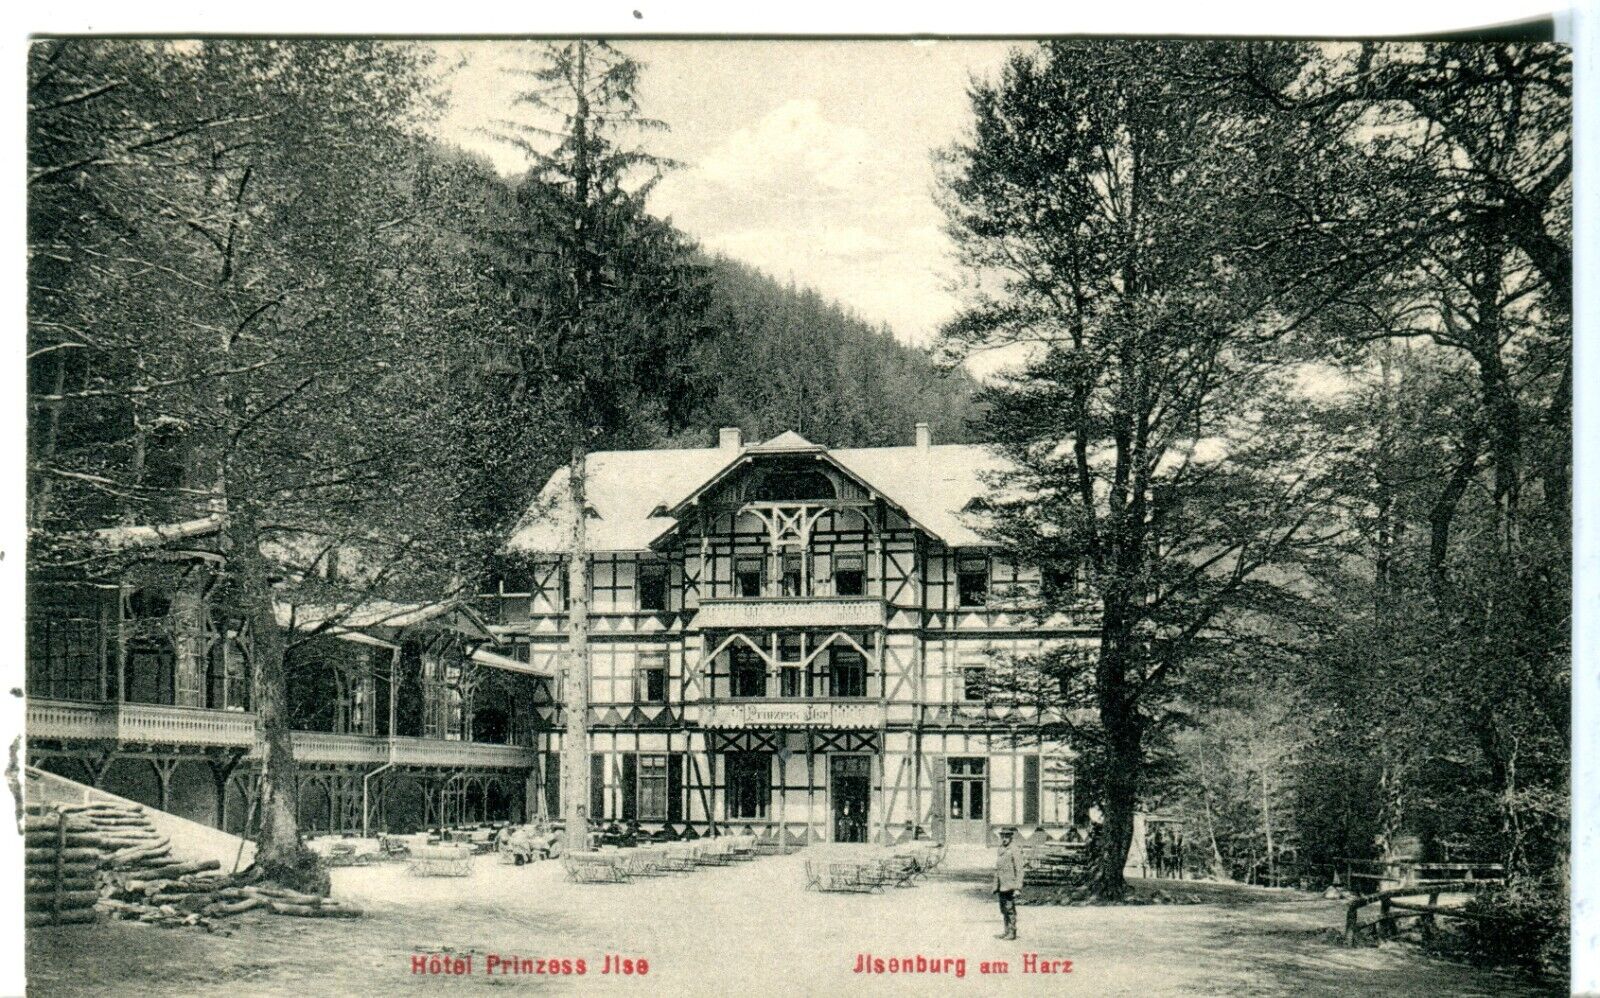 Germany AK Ilsenburg 38865–38871 - Hotel Prinzess Ilse old postcard